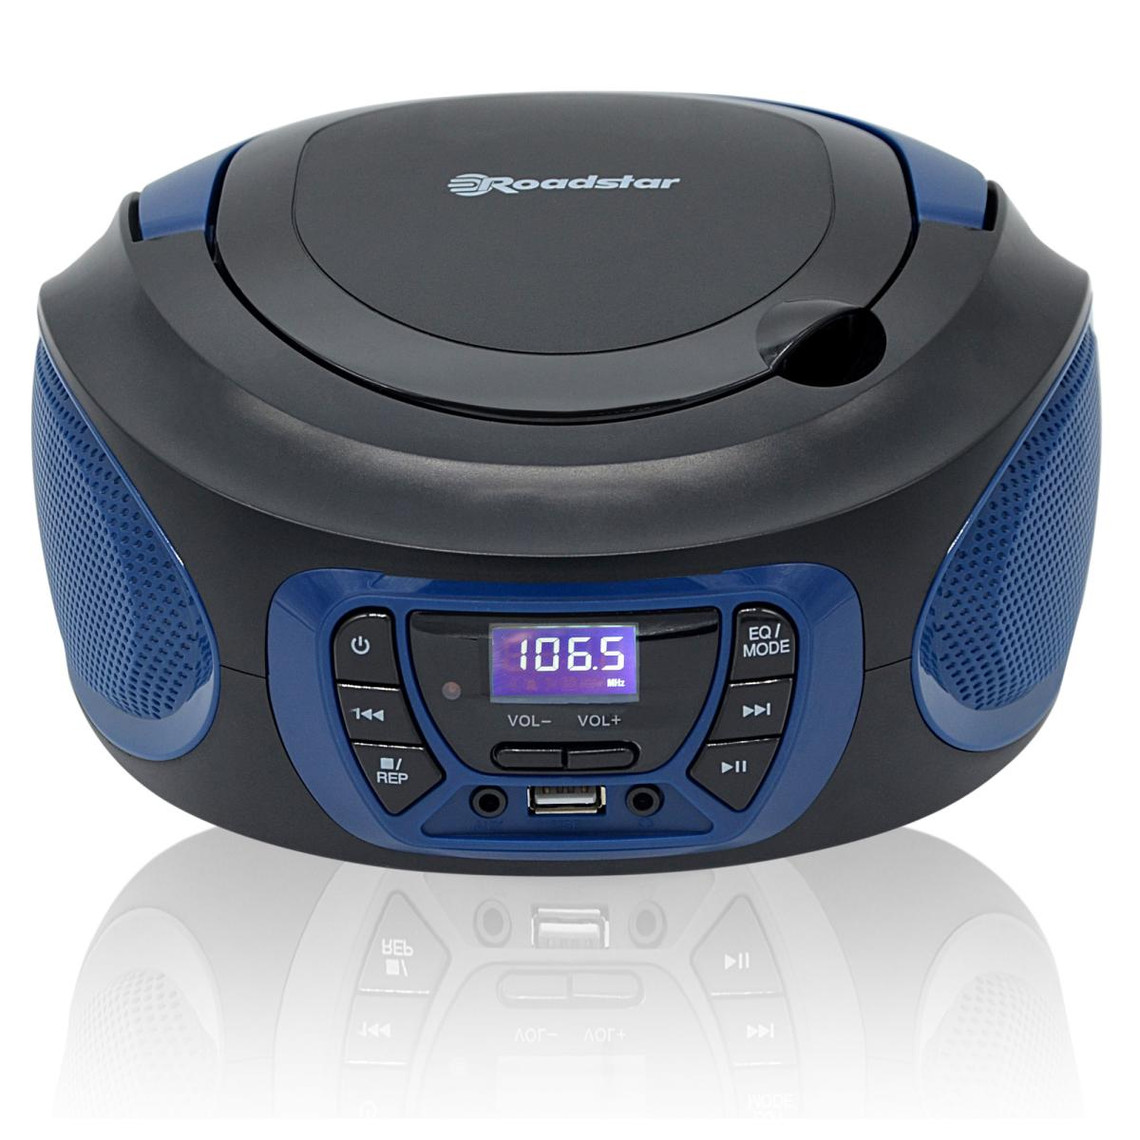 Radio Roadstar Radio CD Portable Numerique FM PLL, Lecteur CD, CD-R, CD-RW, MP3, USB, Stereo, , Noir/Bleu, Roadstar, CDR-365U/BL